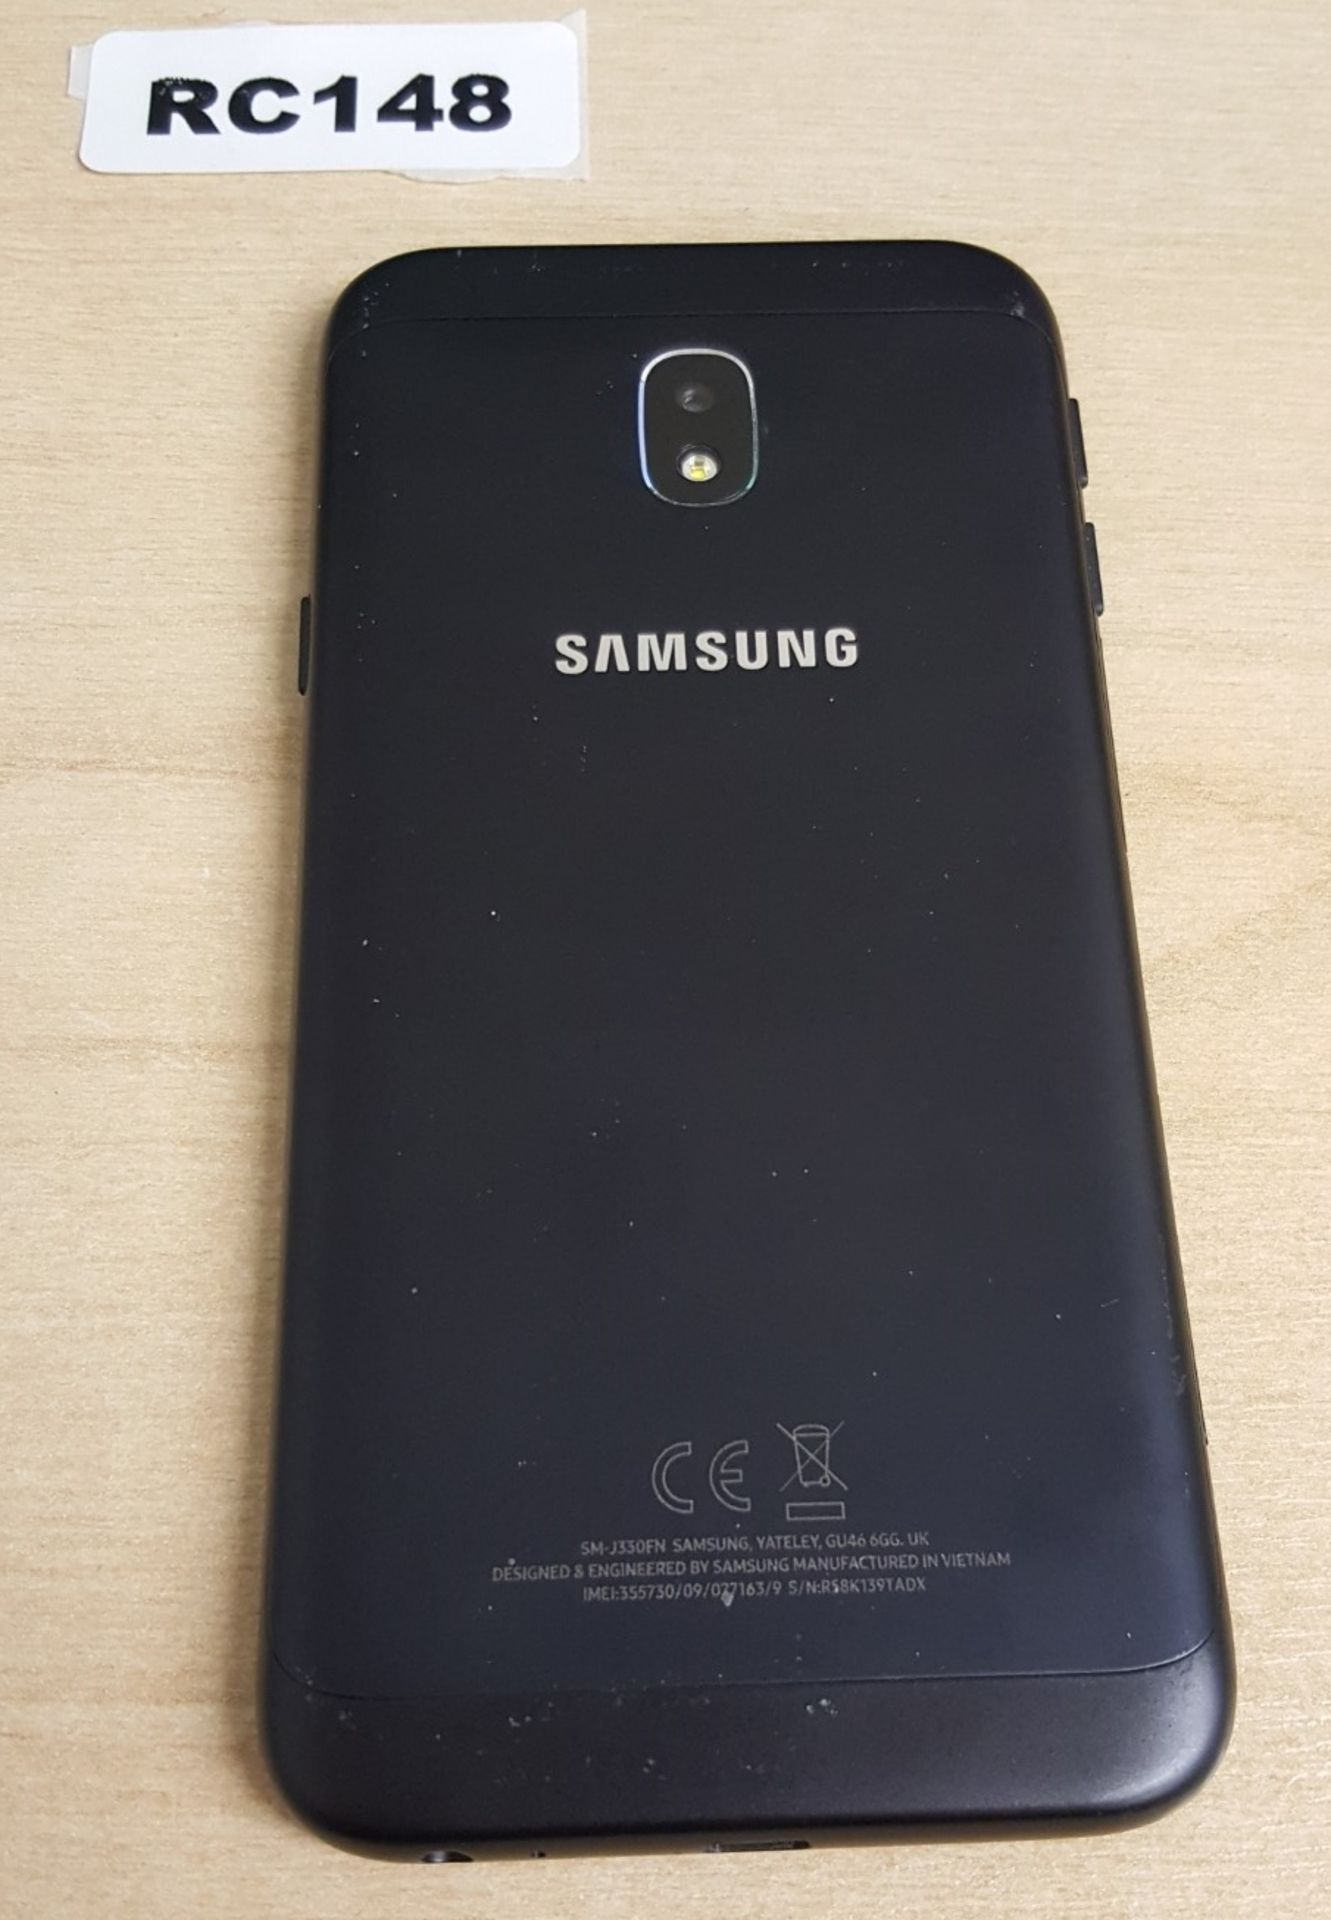 1 x Samsung Galaxy J3 (2017) Black Smartphone - Ref RC148 - Image 2 of 2